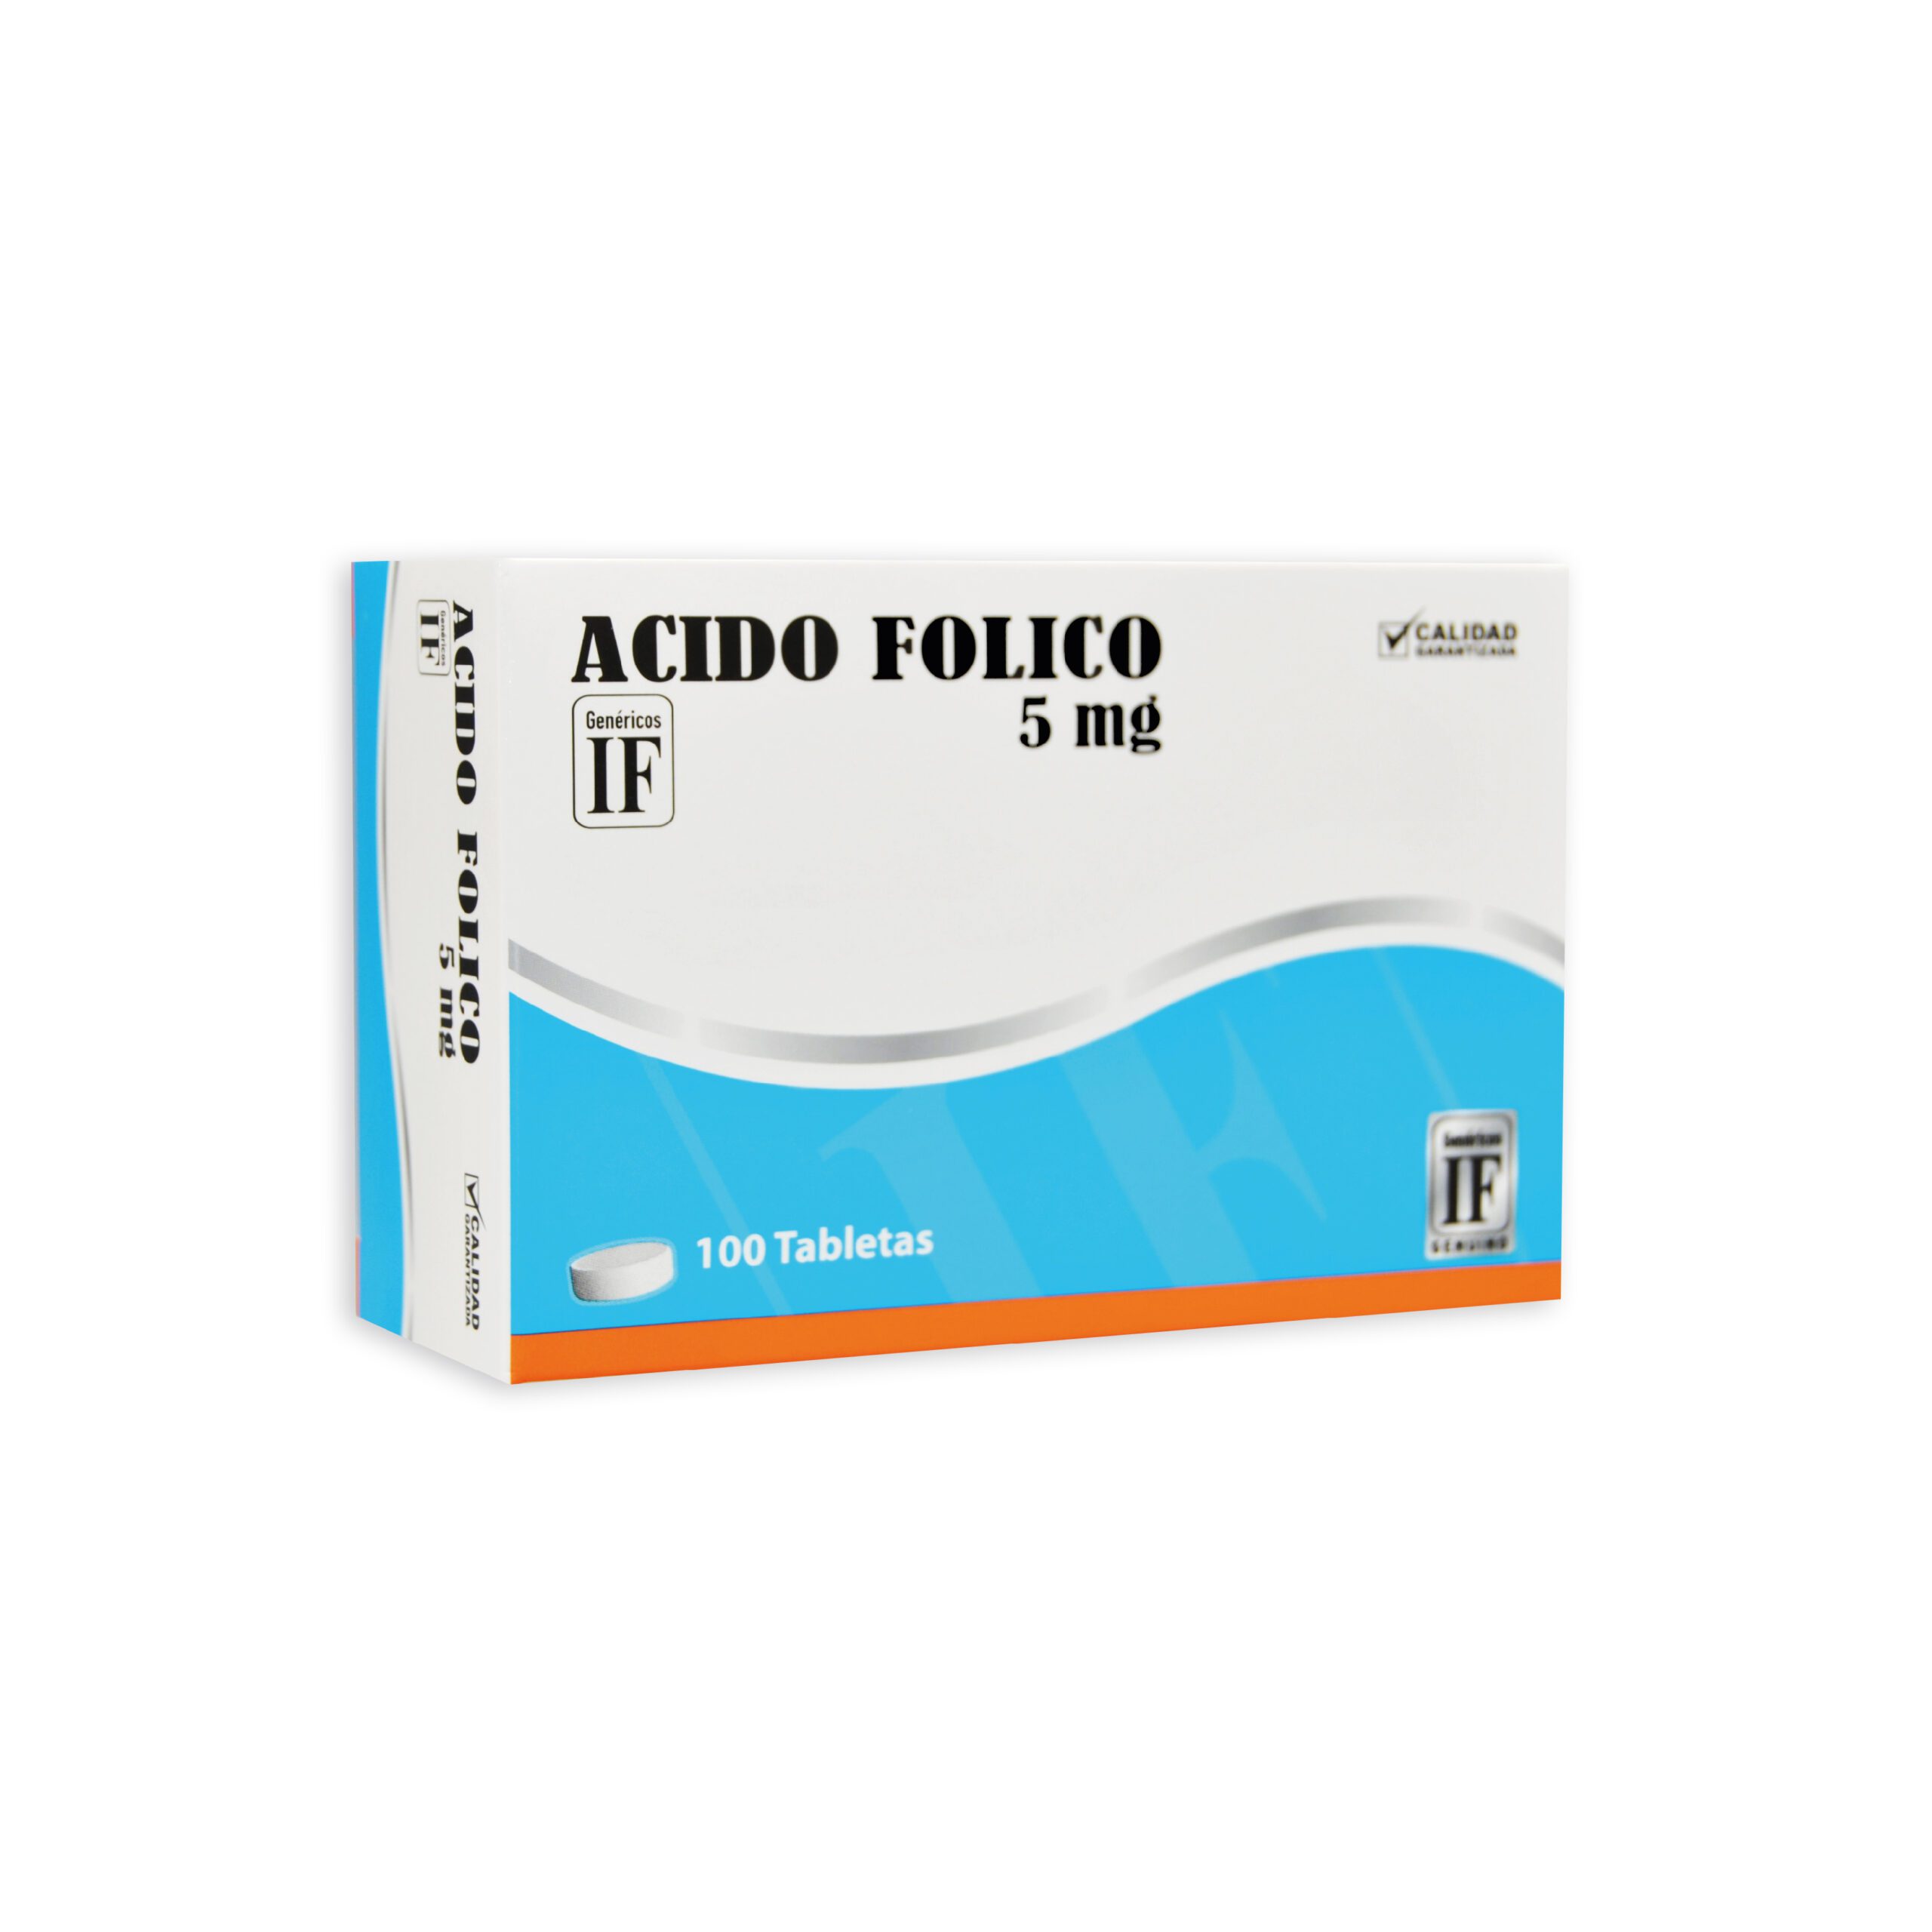 ACIDO FOLICO IF (JARABE) – Ibero Fármacos